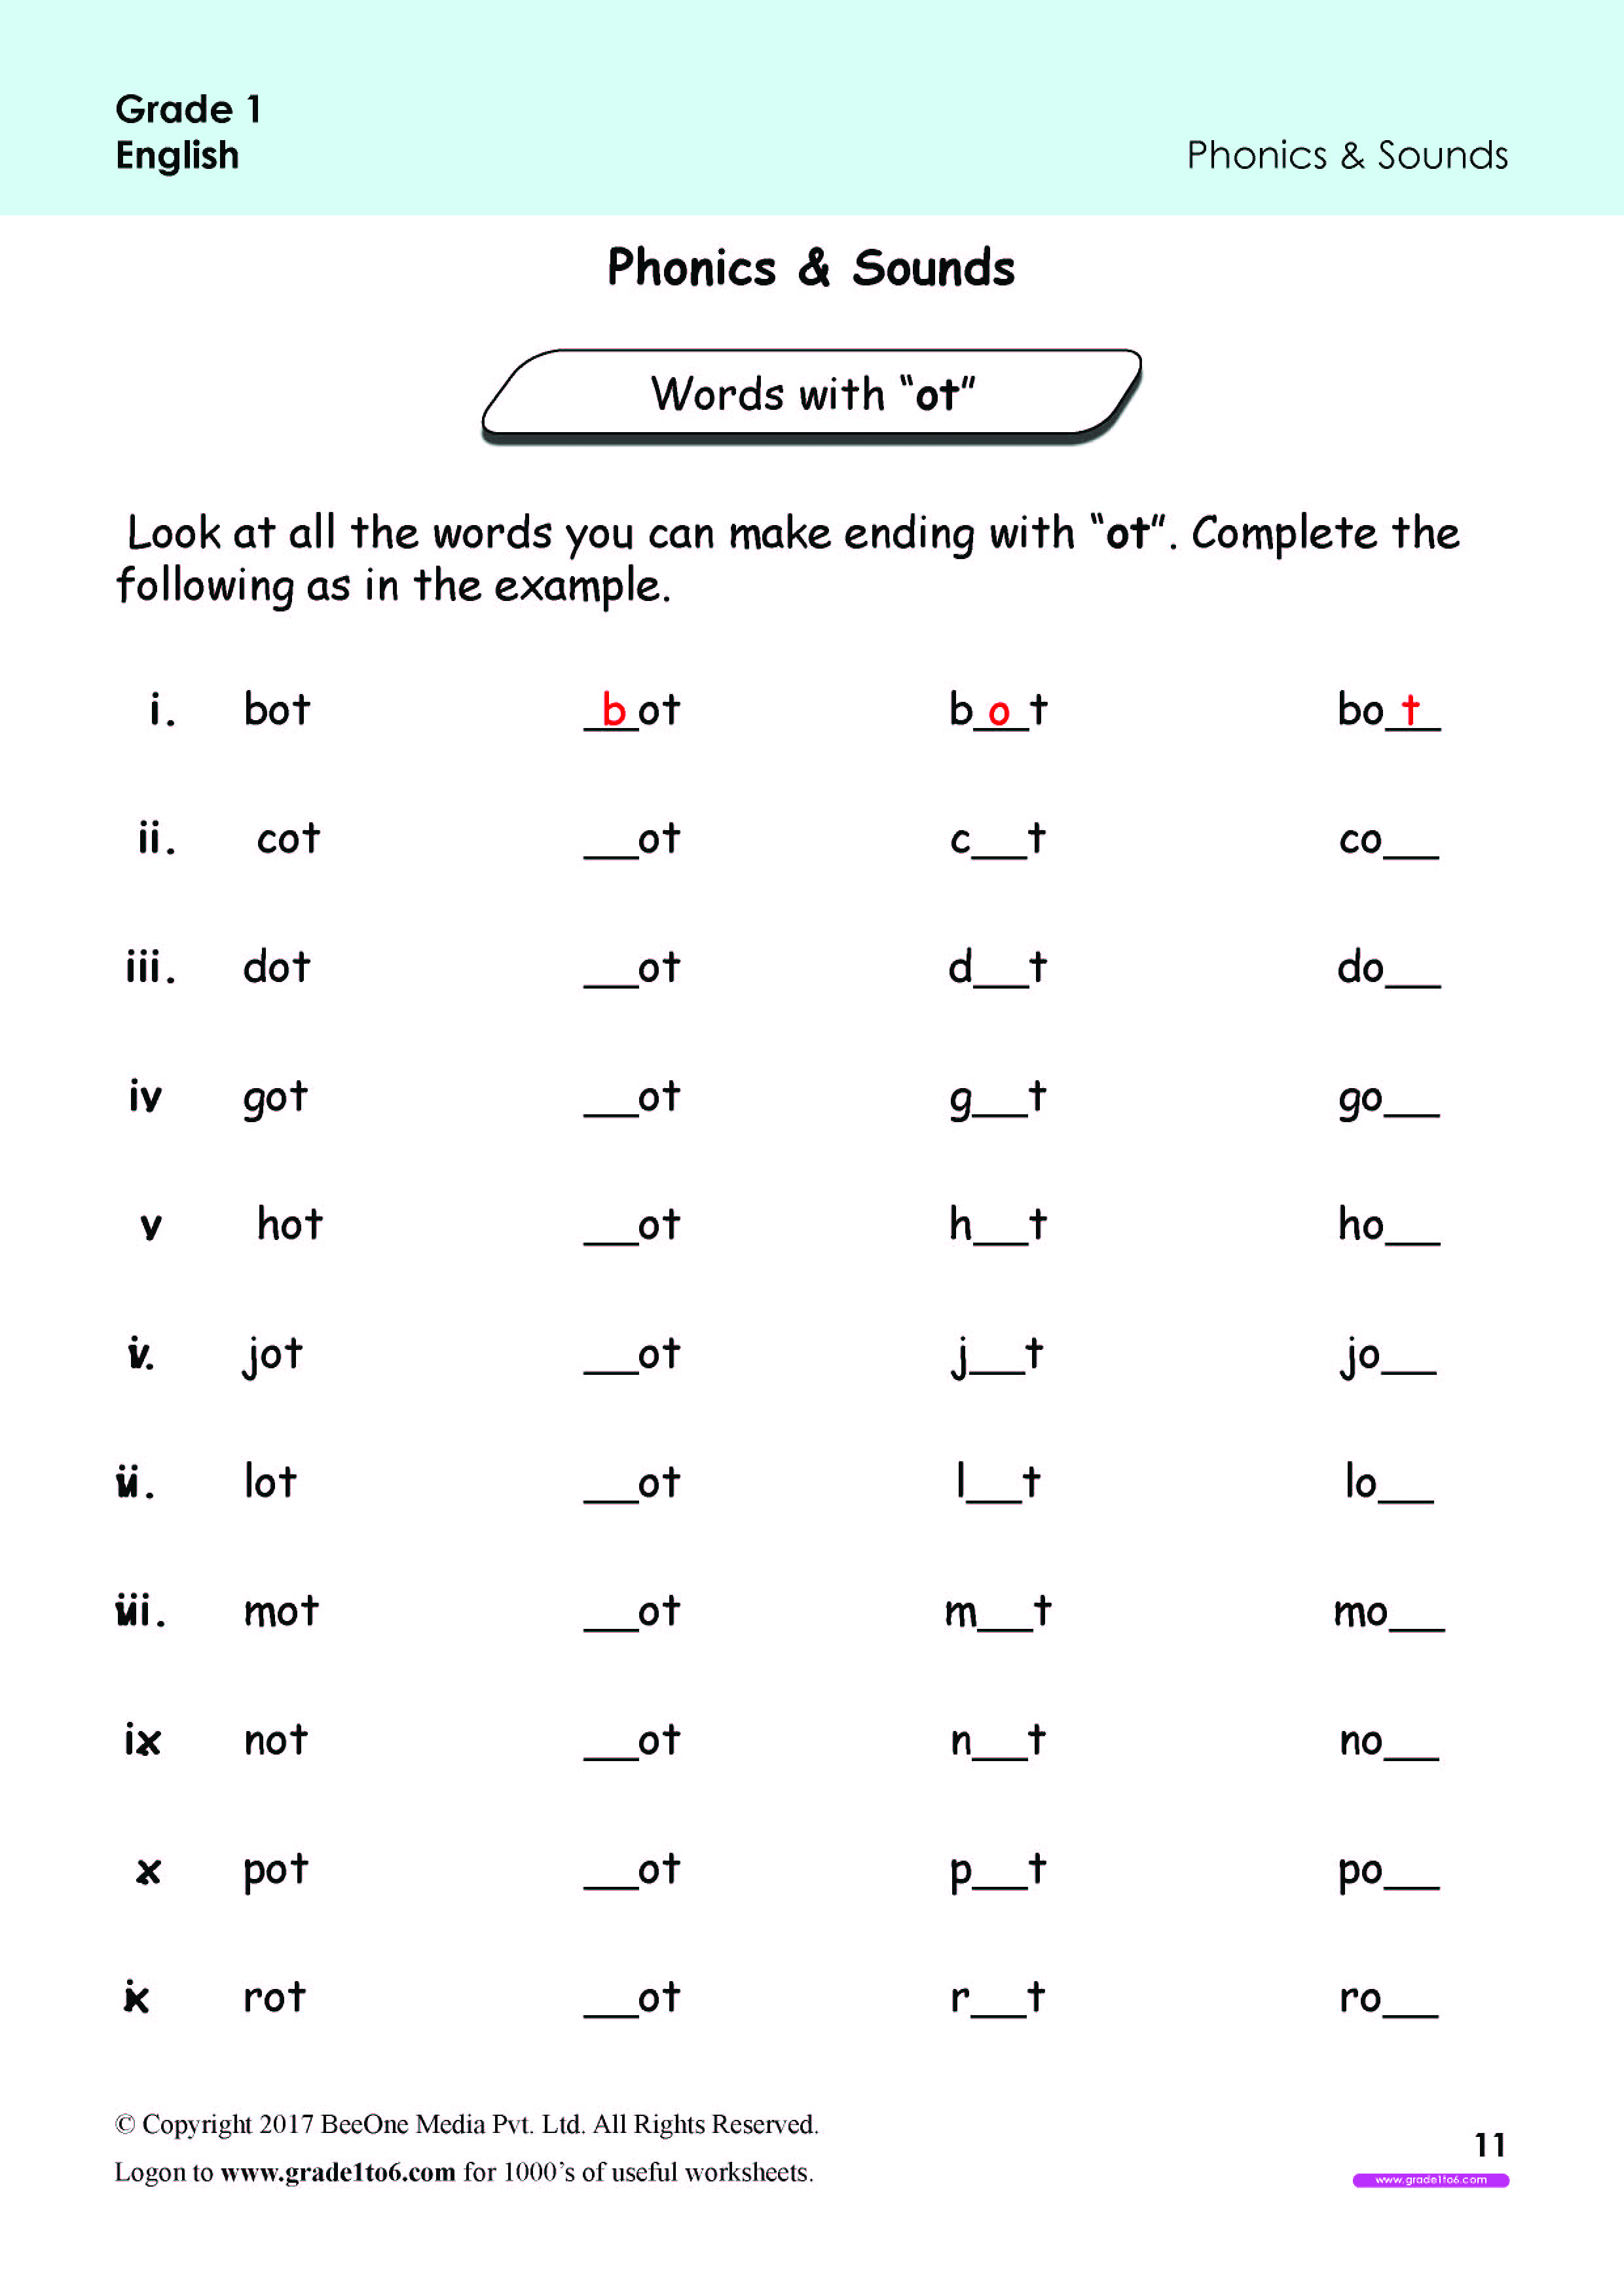 Grade 1 English Worksheets Pdf English Worksheets For Grade1 Archives Learningprodigy Check